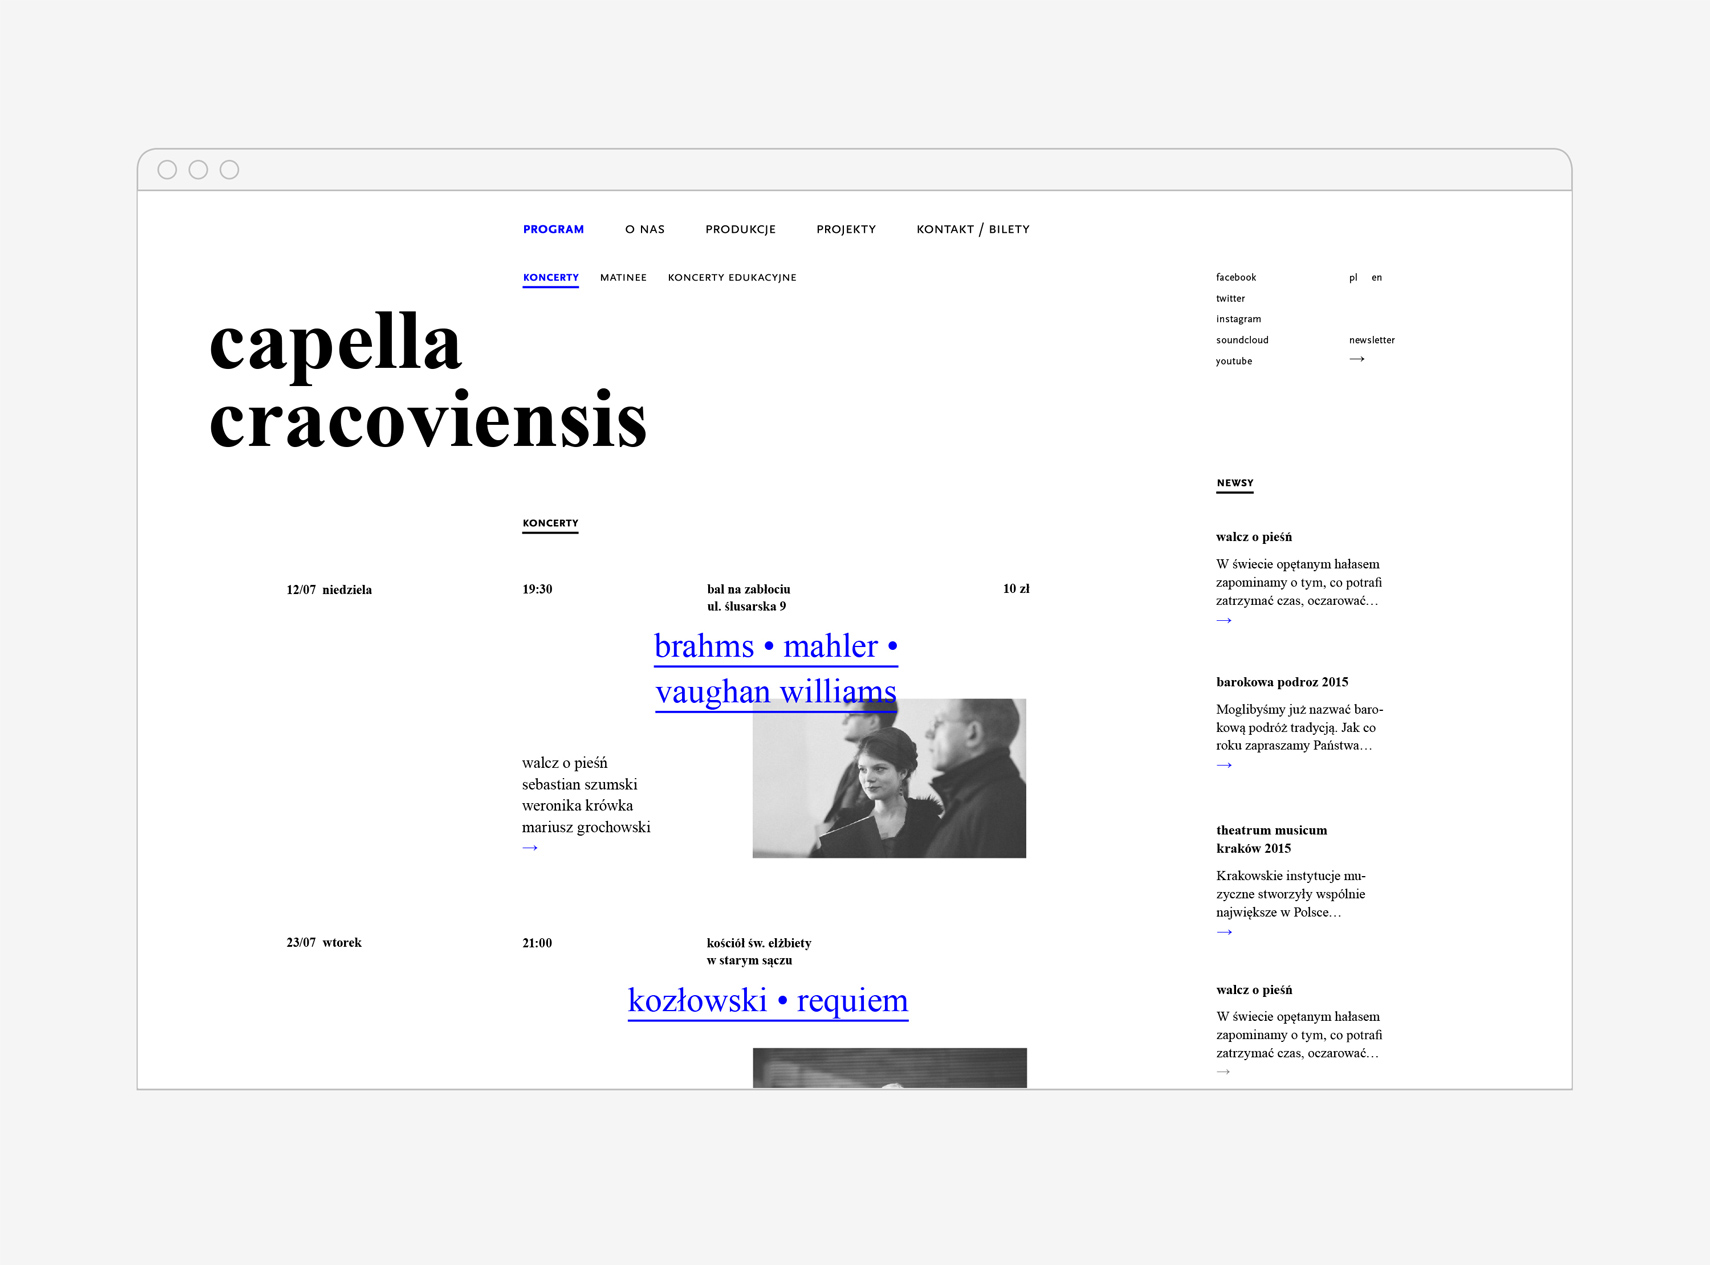 Capella Cracoviensis